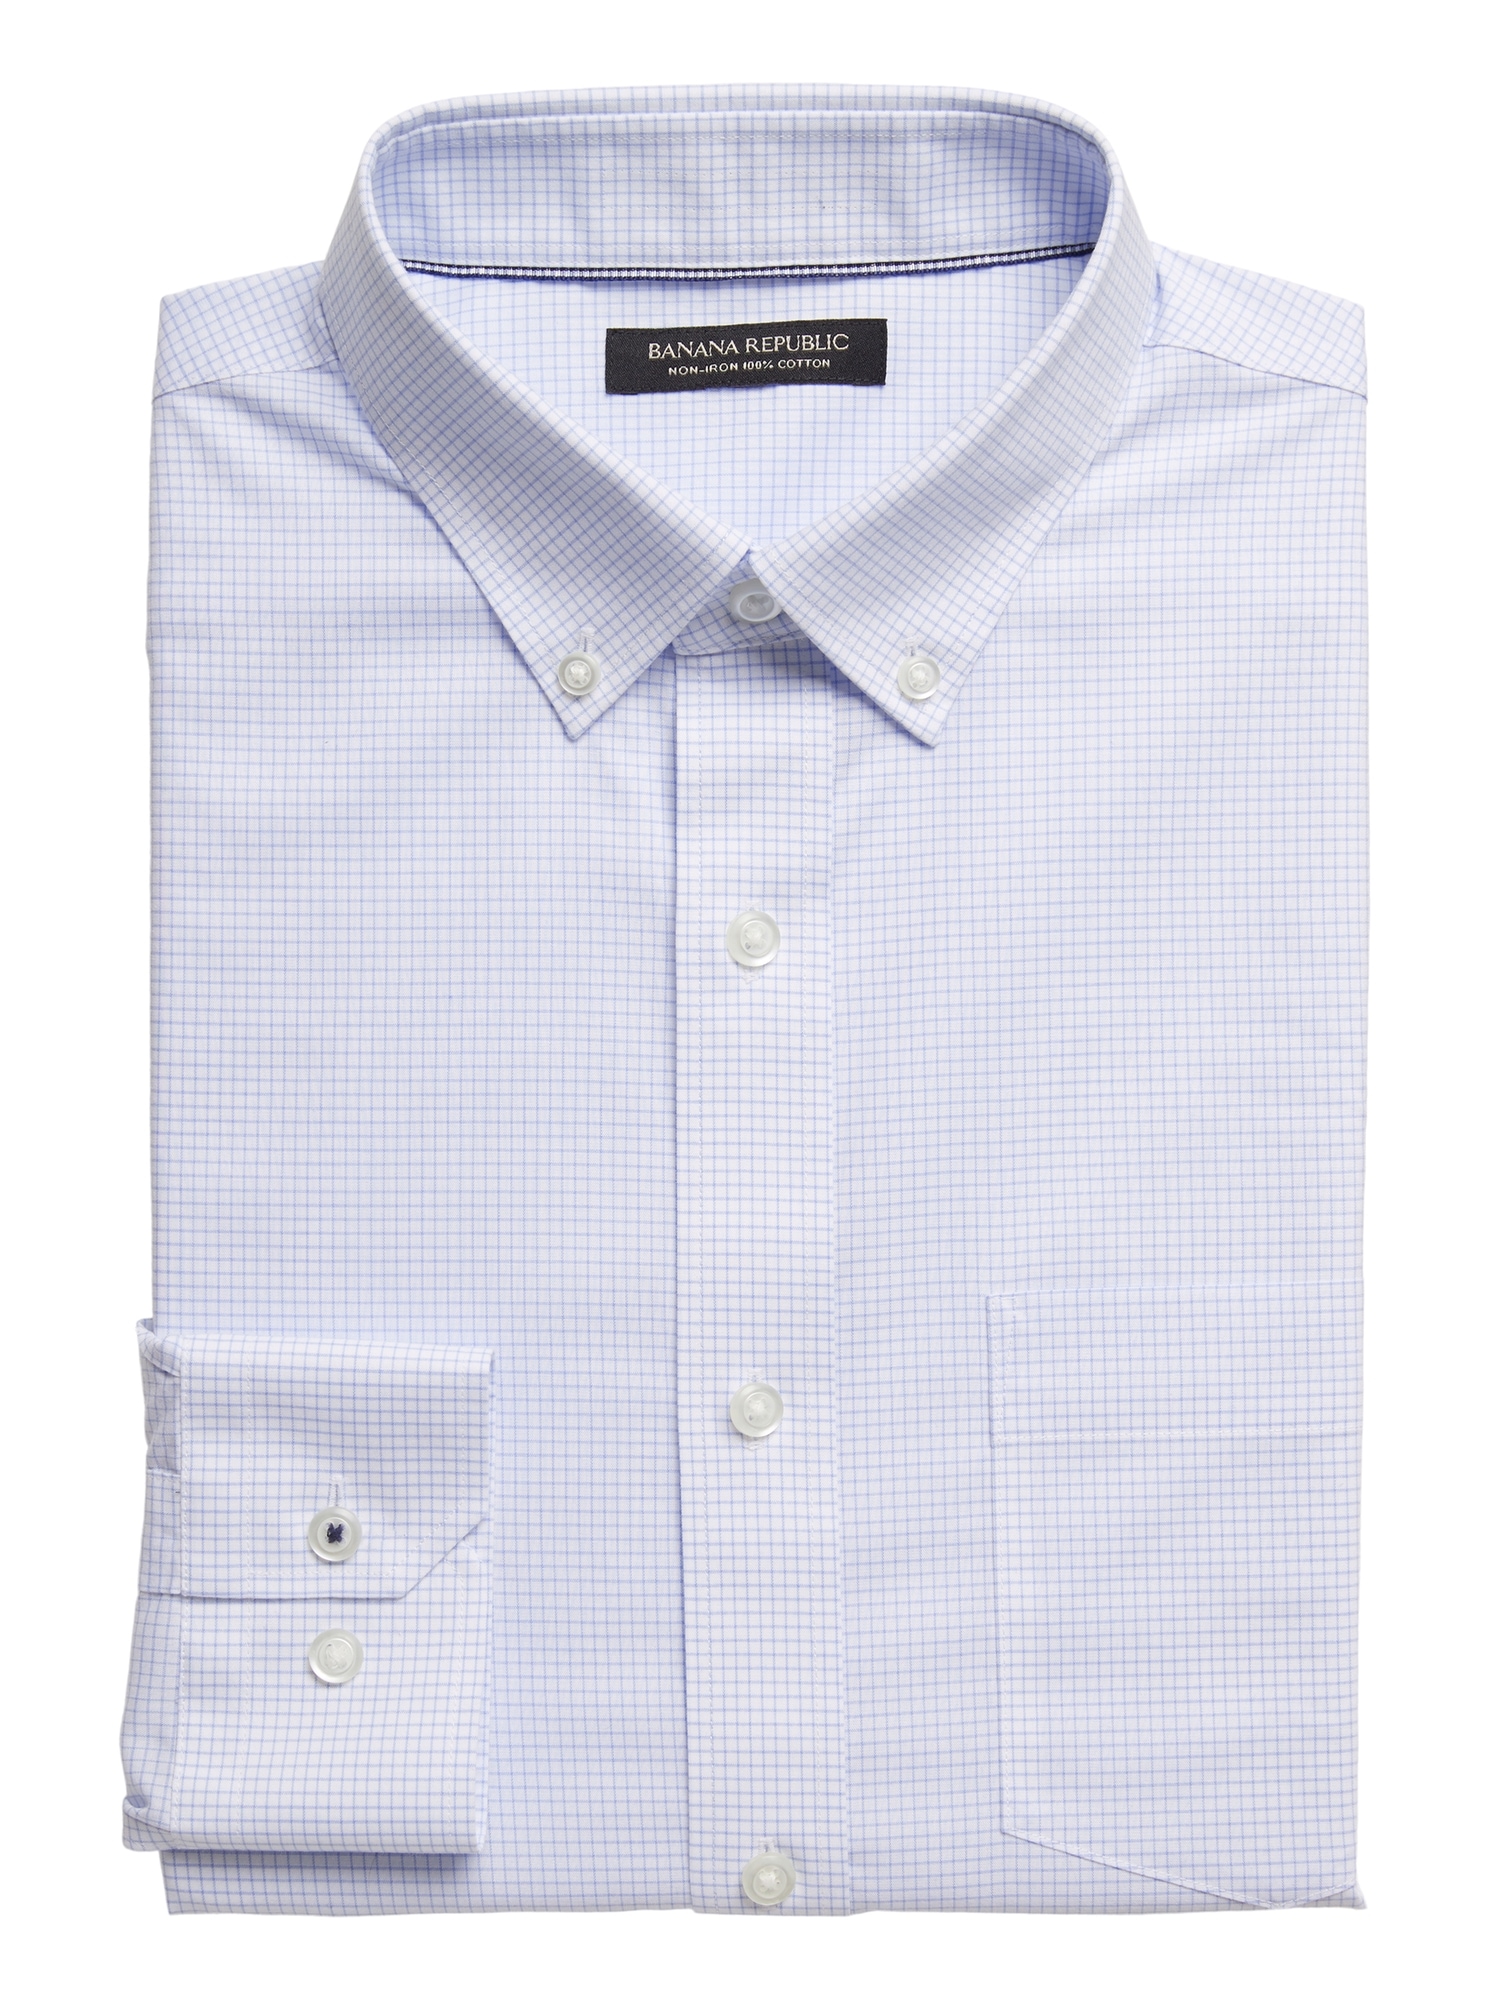 Standard Non-Iron Dress Shirt with Button-Down Collar